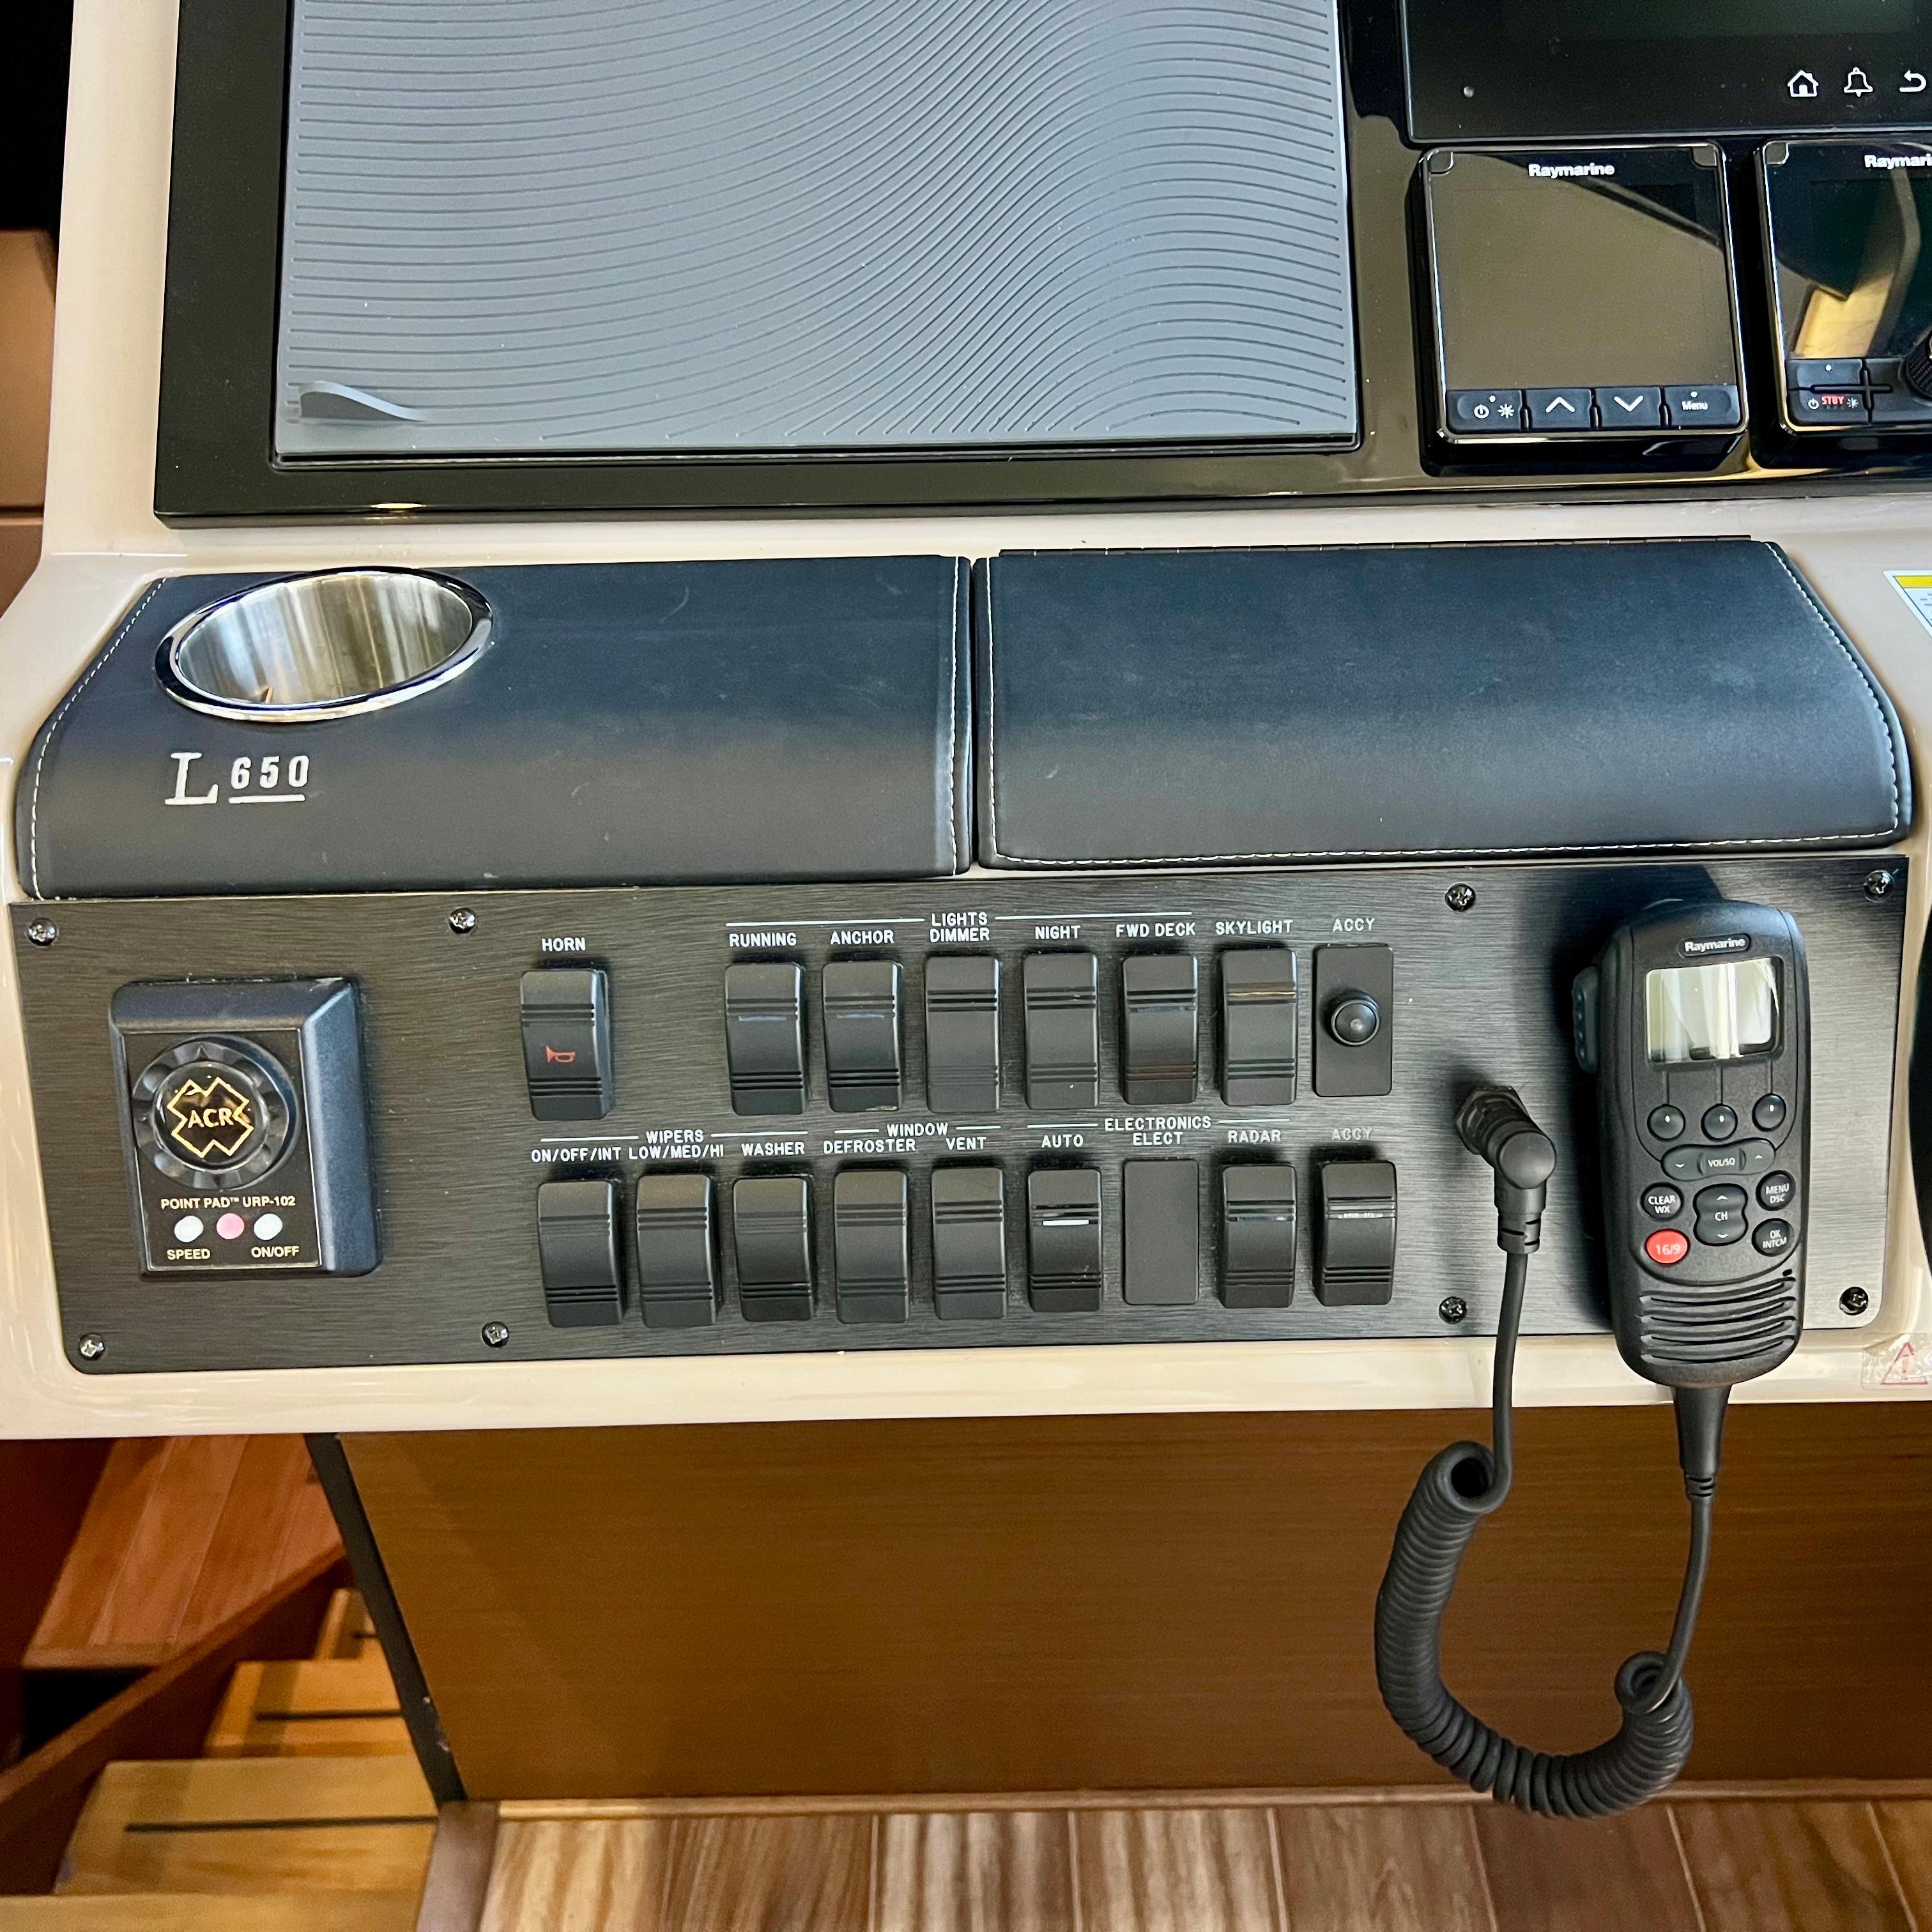 VHF, helm switches w/spotlight control